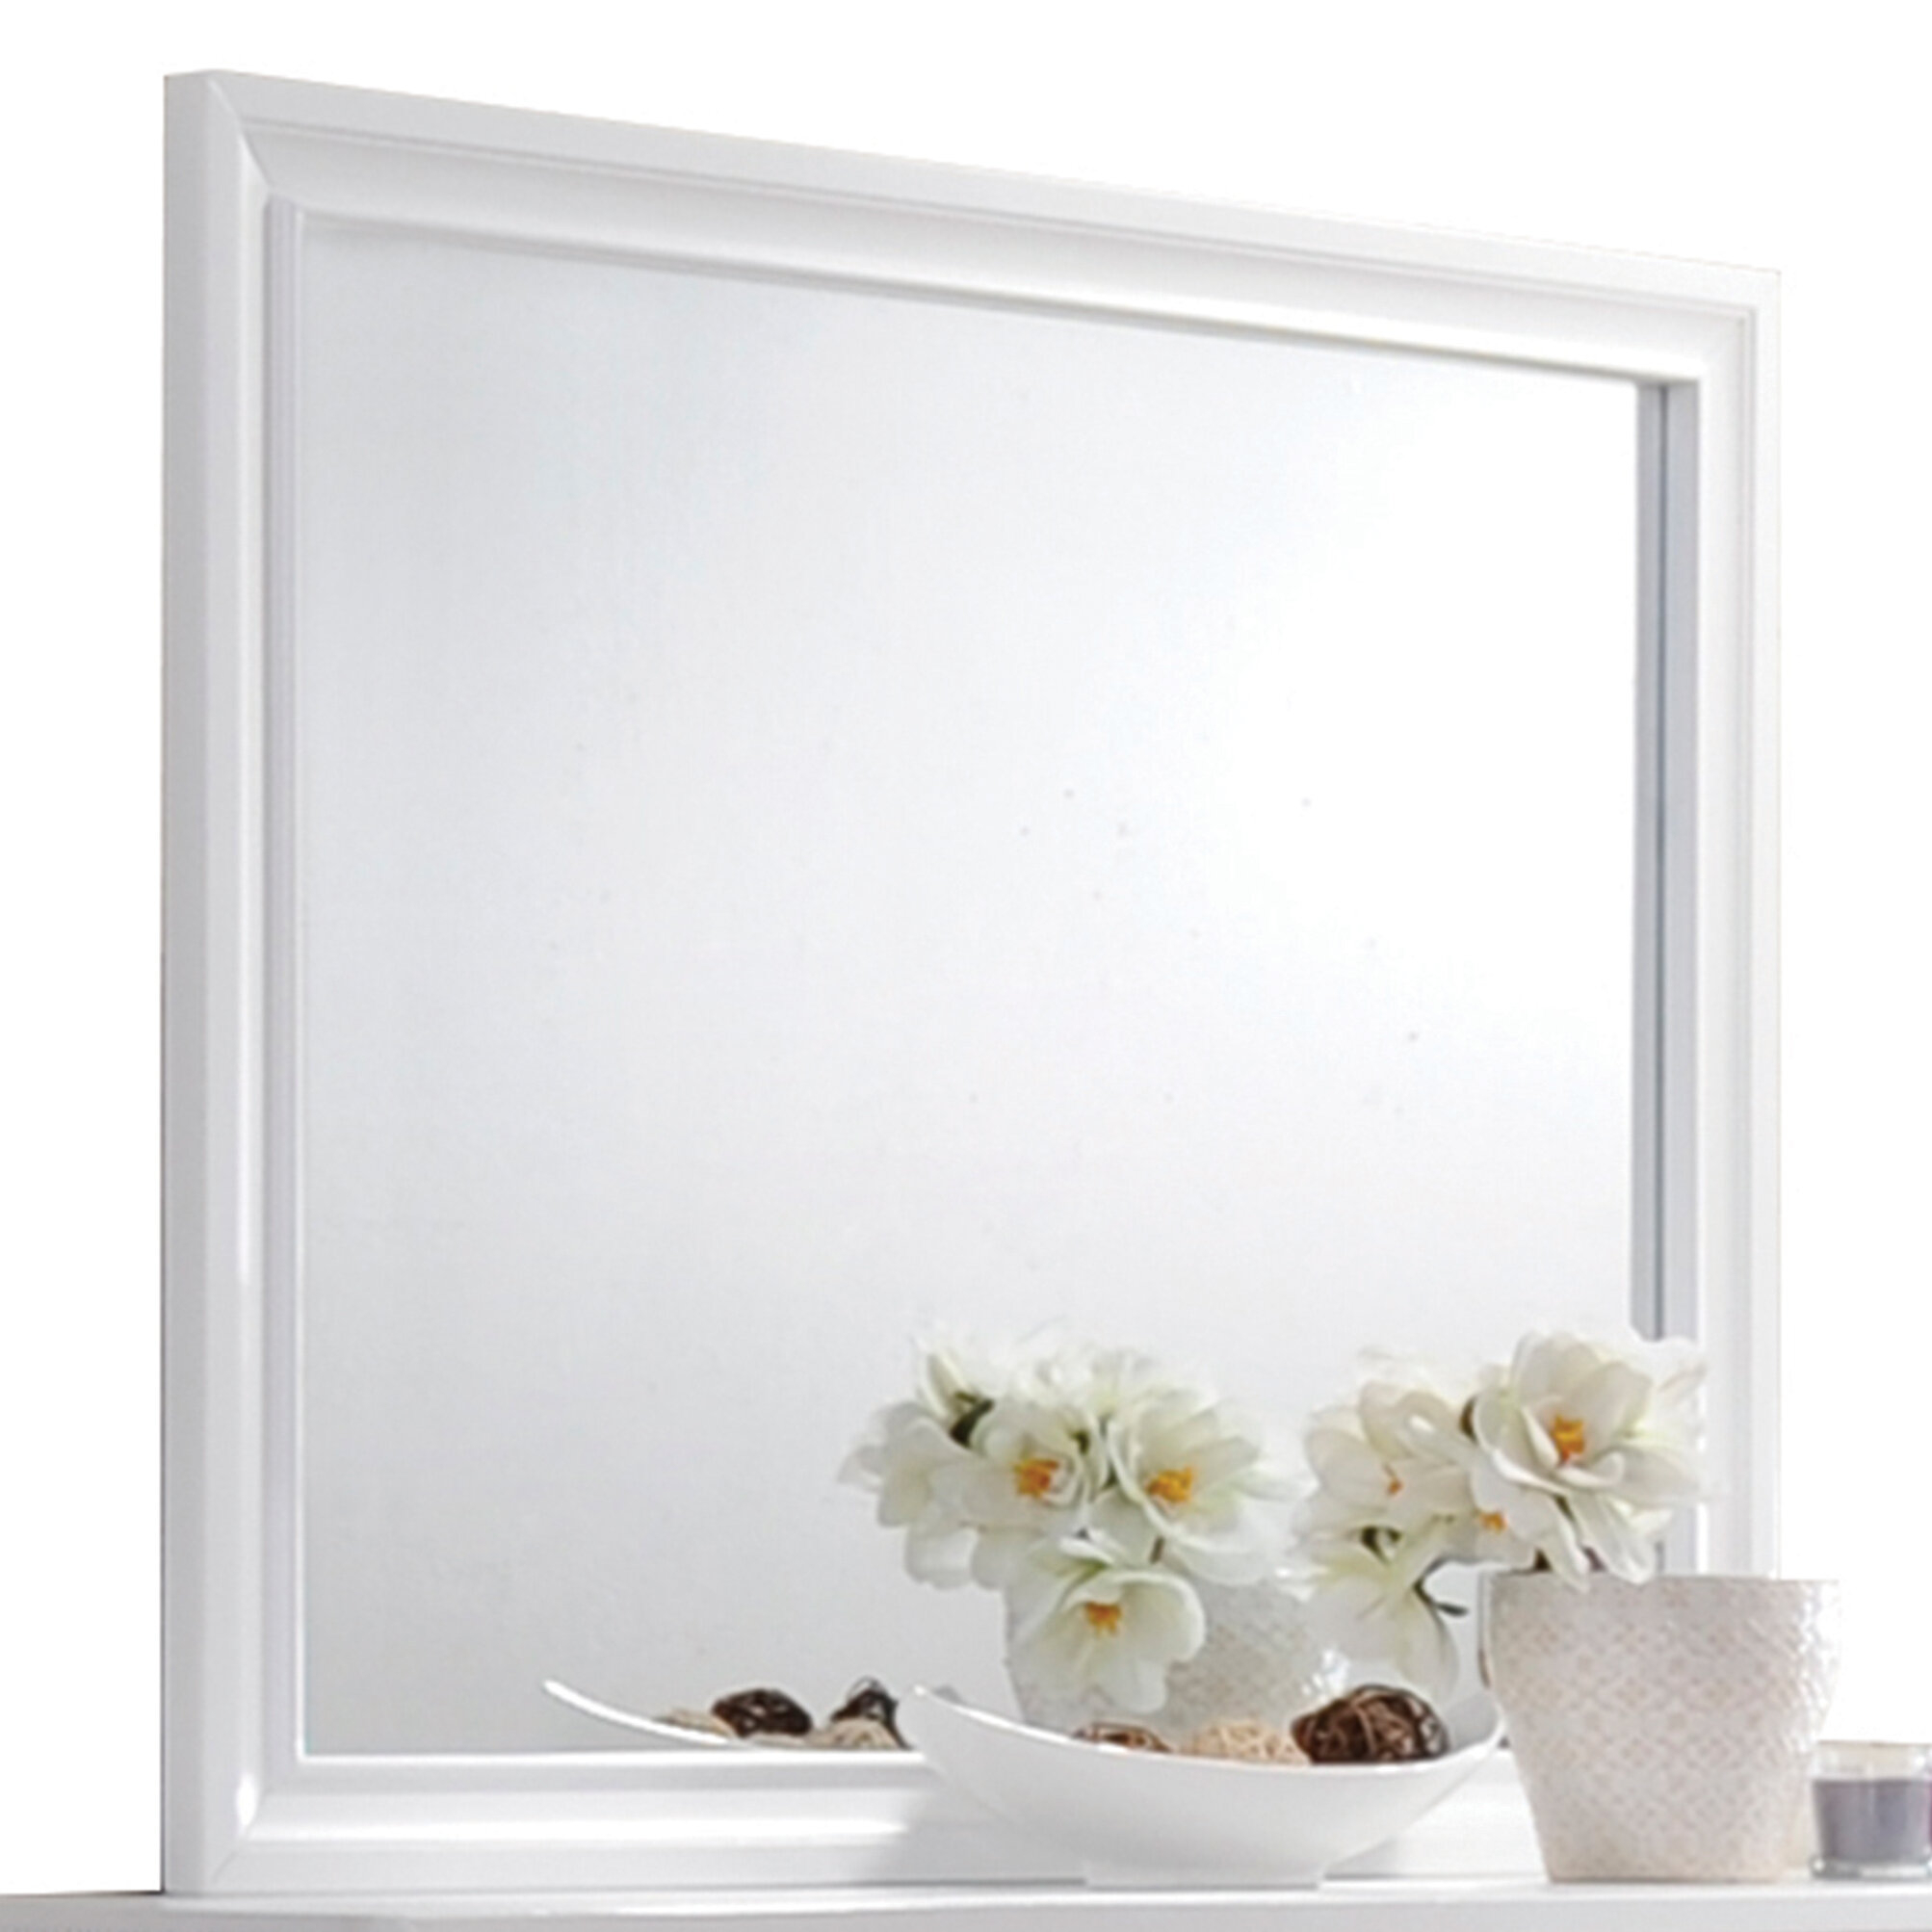 Large Wood Framed Mirror You Ll Love In, White Framed Mirror For Dresser